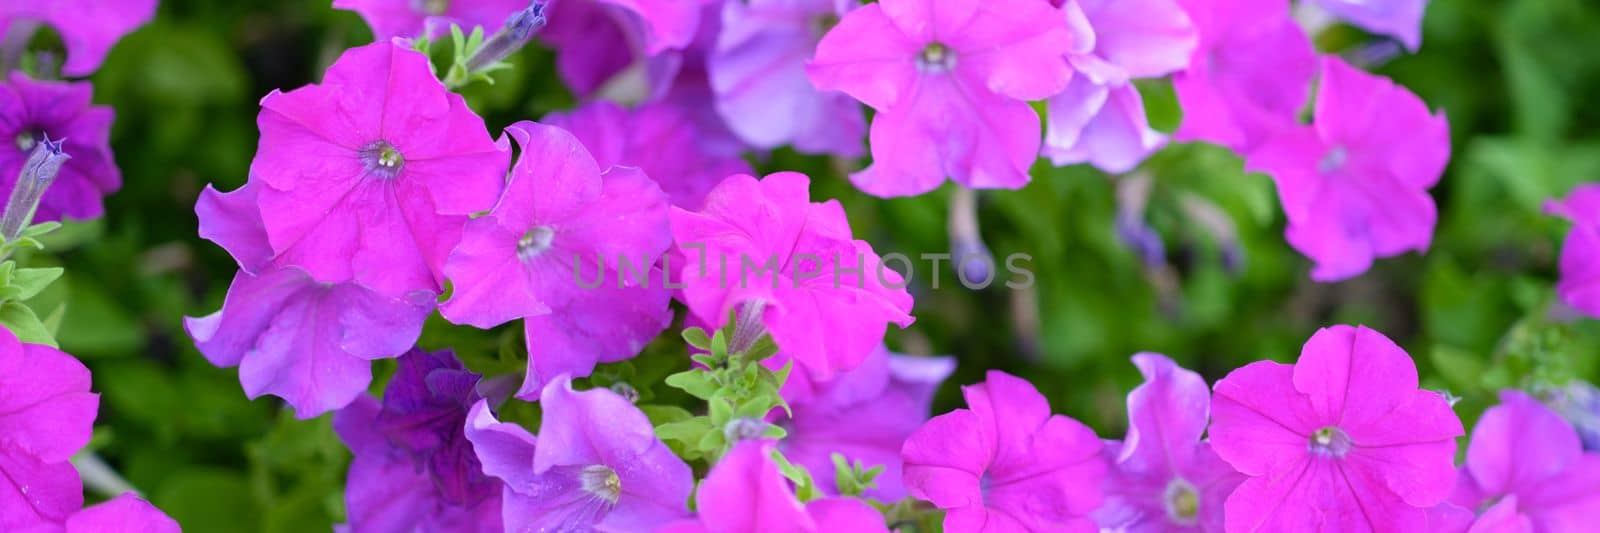 Beautiful pink petunia flowers in summer garden. Flowers texture background.